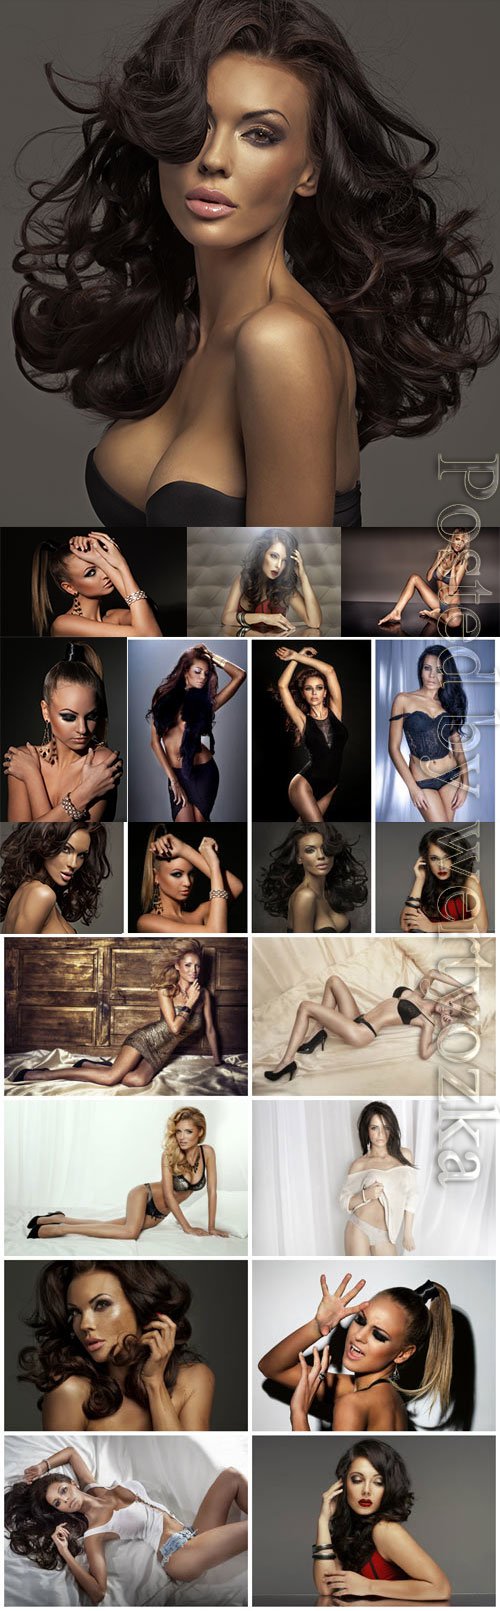 StockPhoto - Luxury Women In Lingerie Posing Vol 19